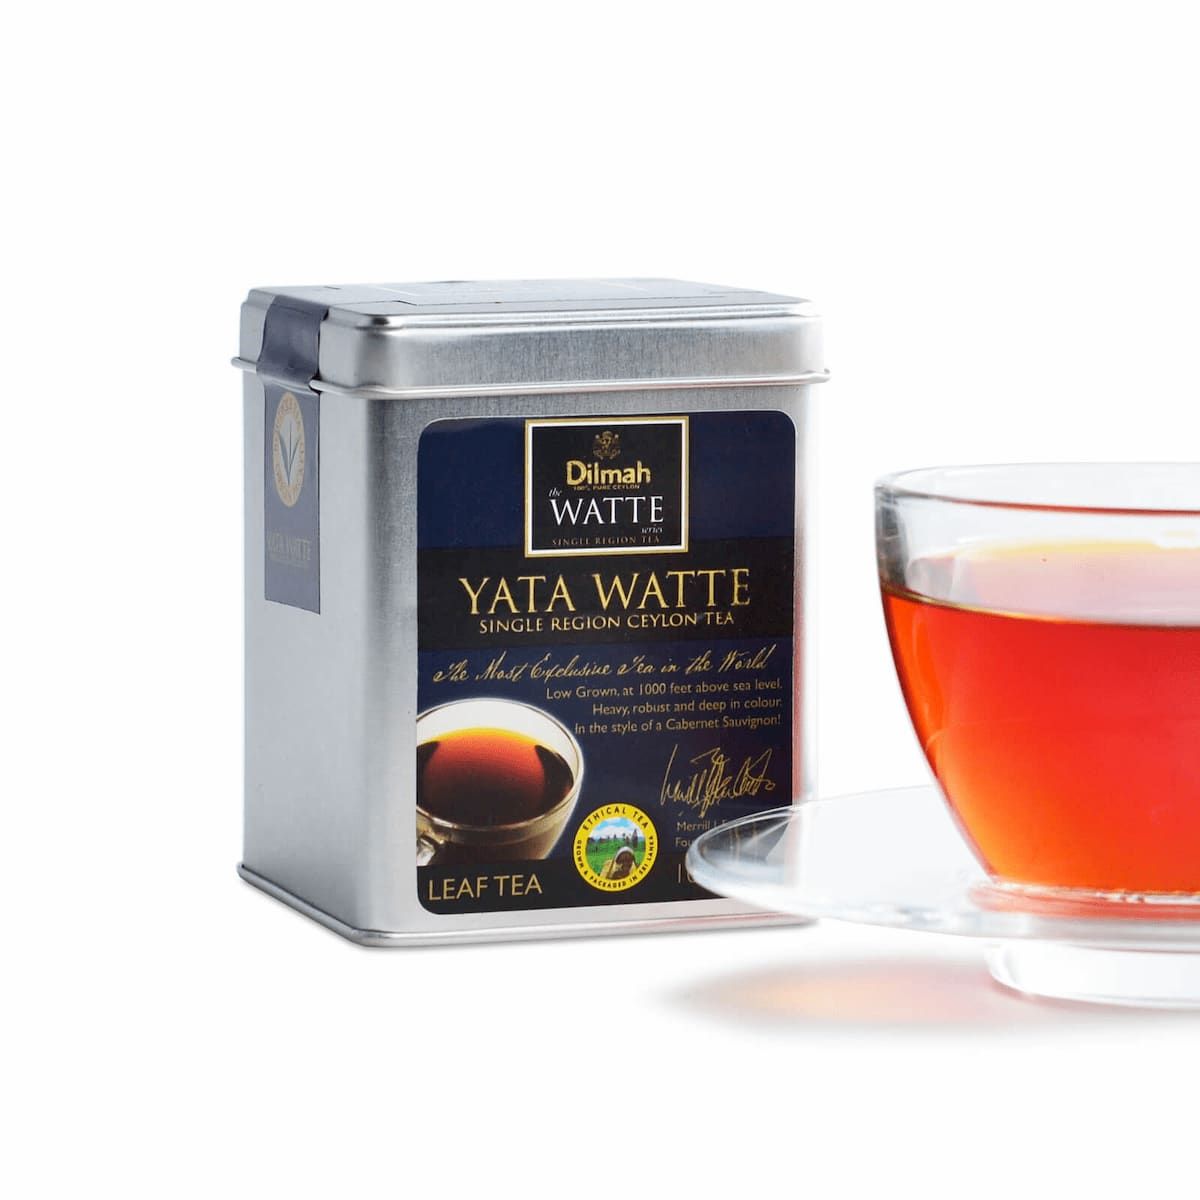 Yatta Watte, 100g loose leaf Black Tea